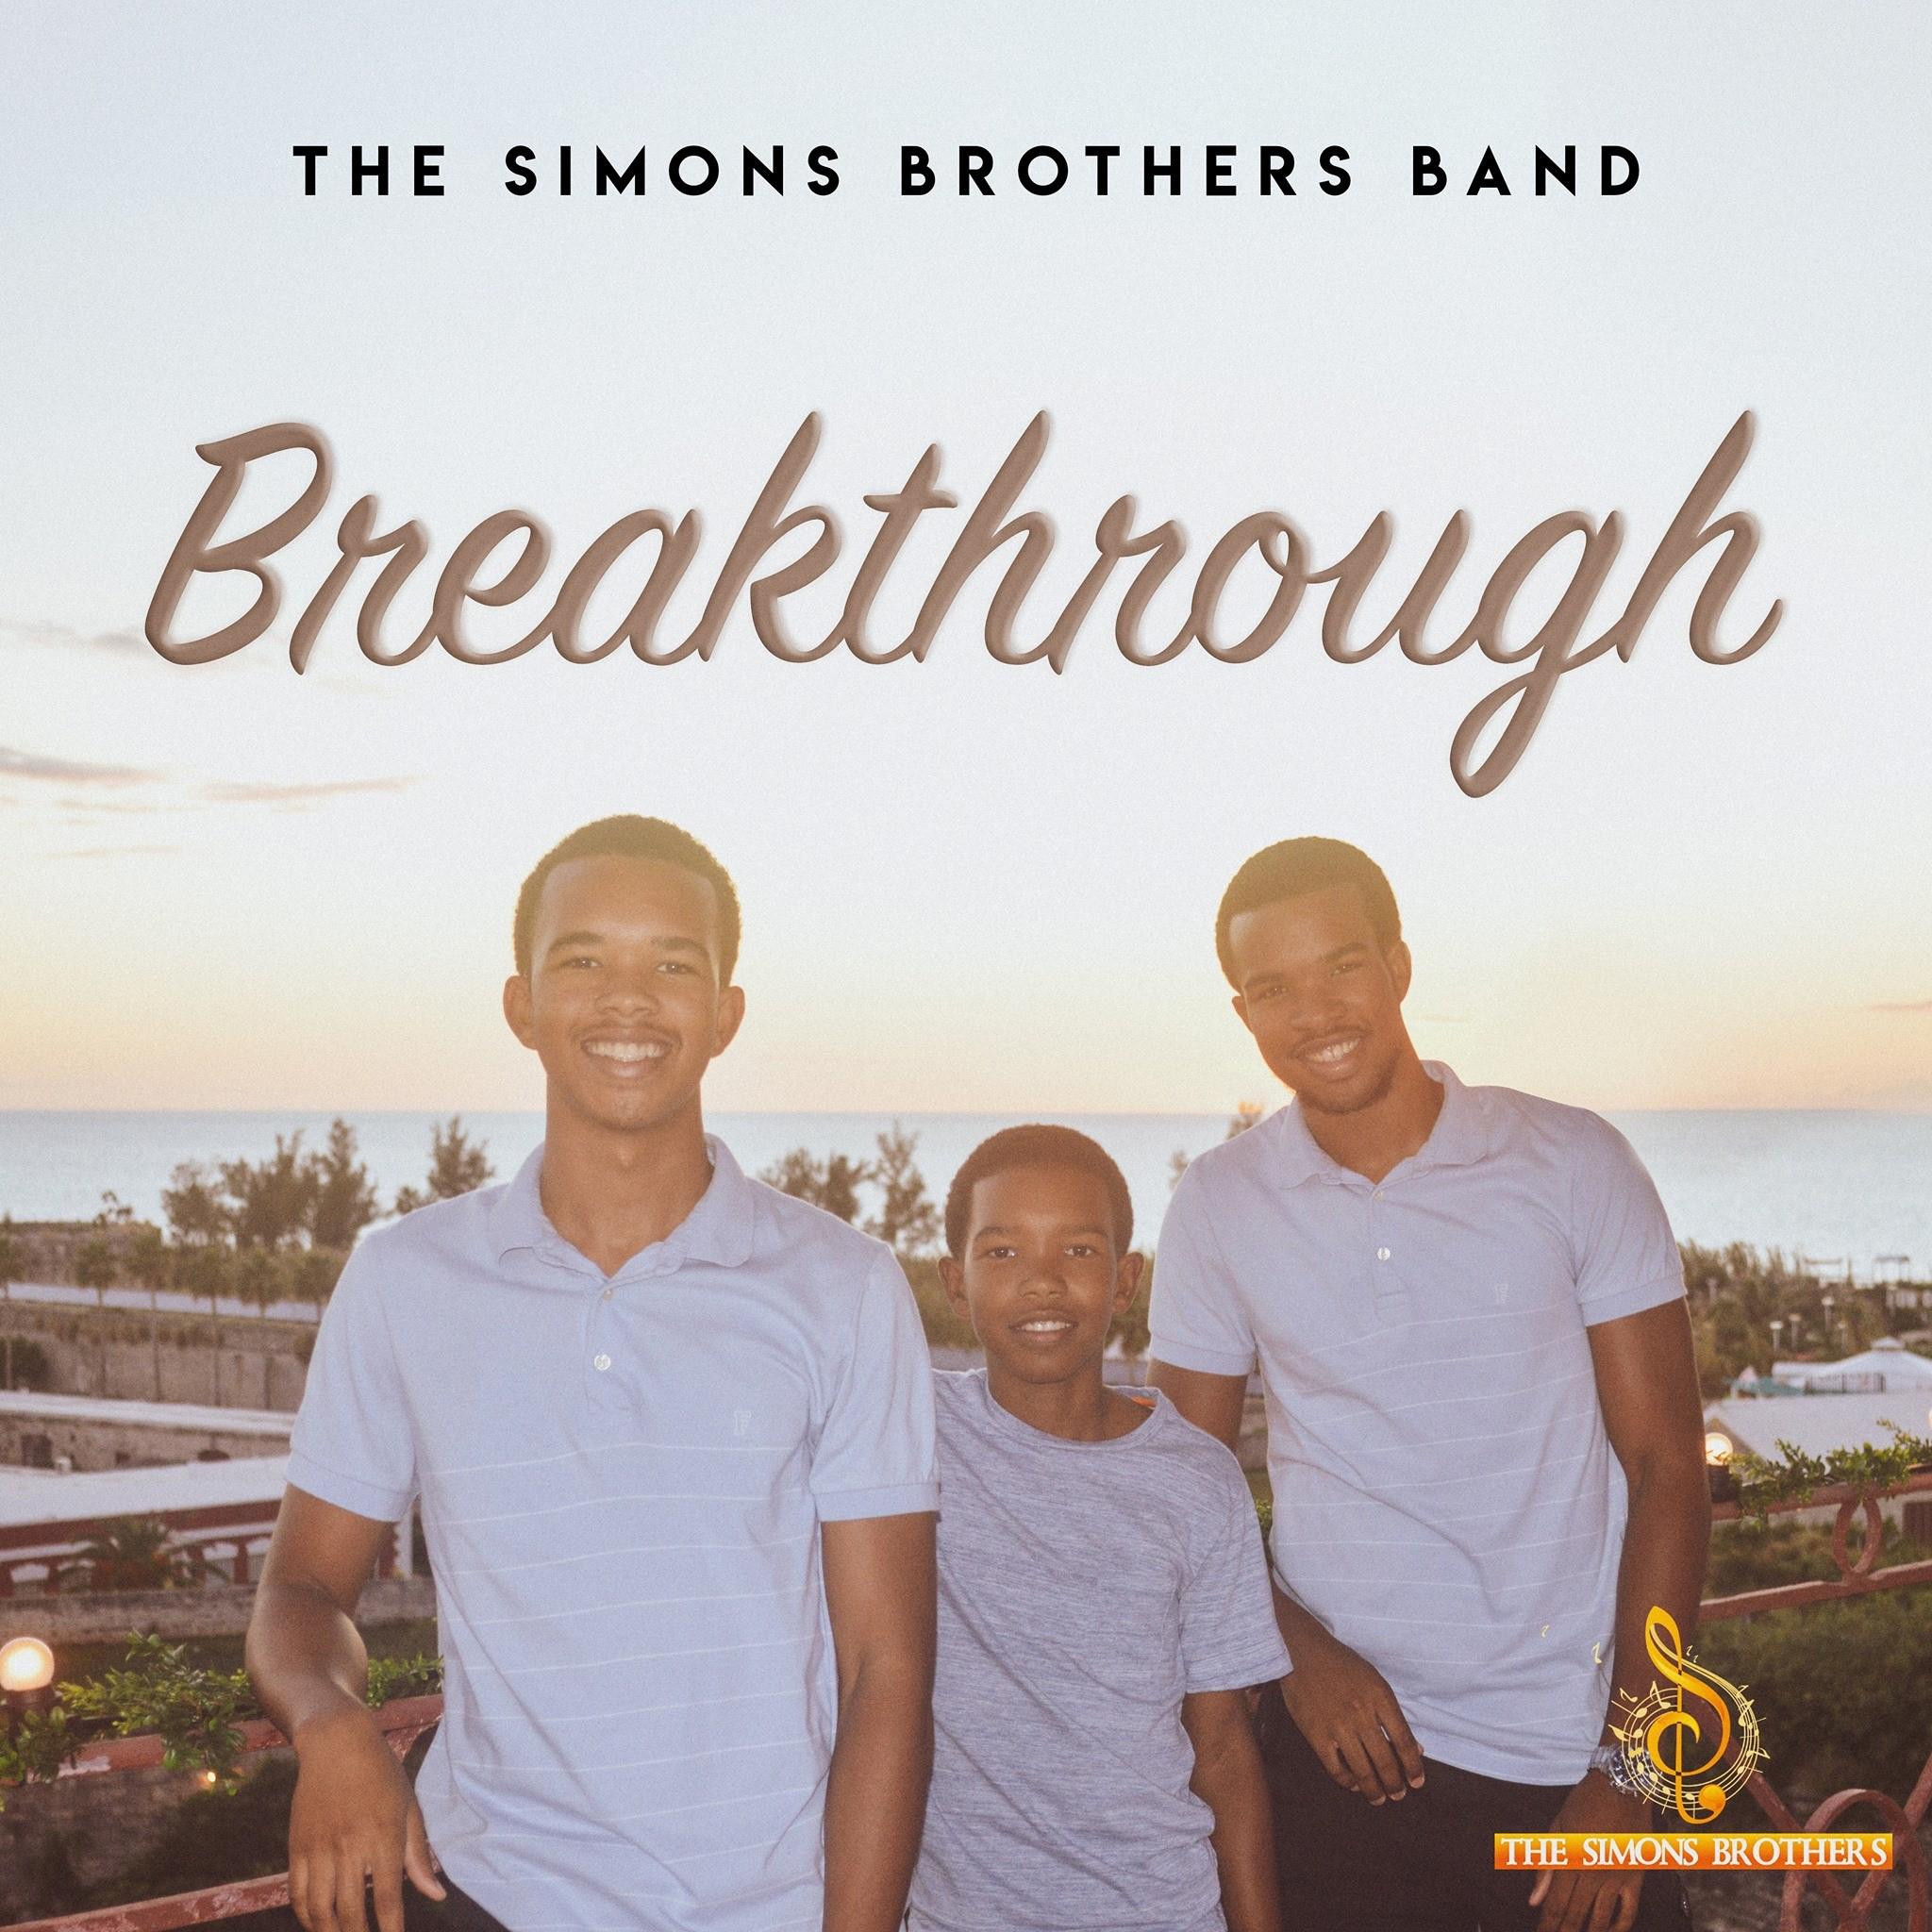 The Simons Brothers Band